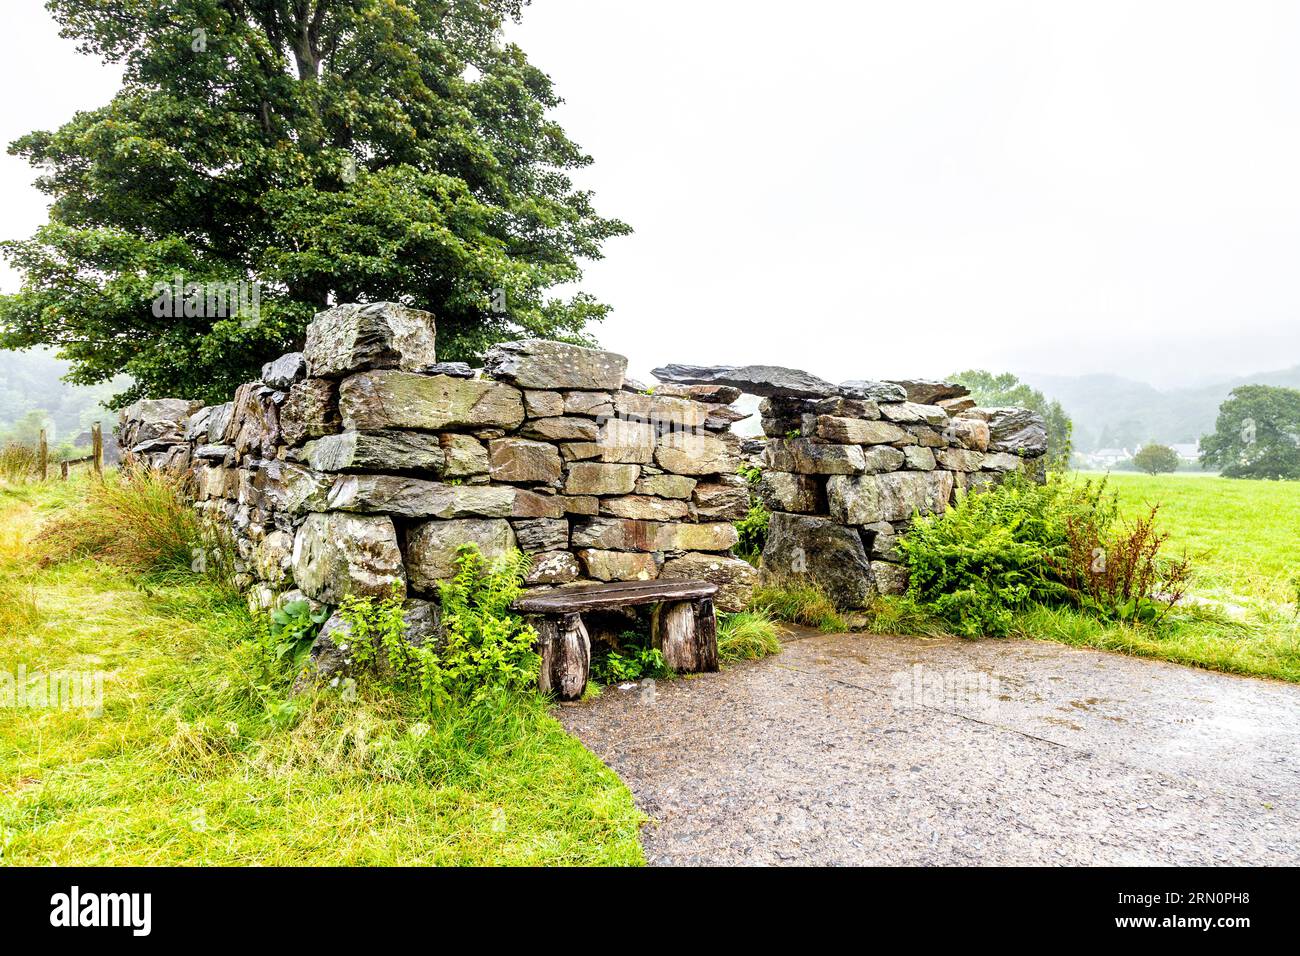 Ruined cottage with the sculpture of dog Gelert near Gelert's Grave, Beddgelert, Snowdonia National Park, Gwynedd, Wales, UK Stock Photo